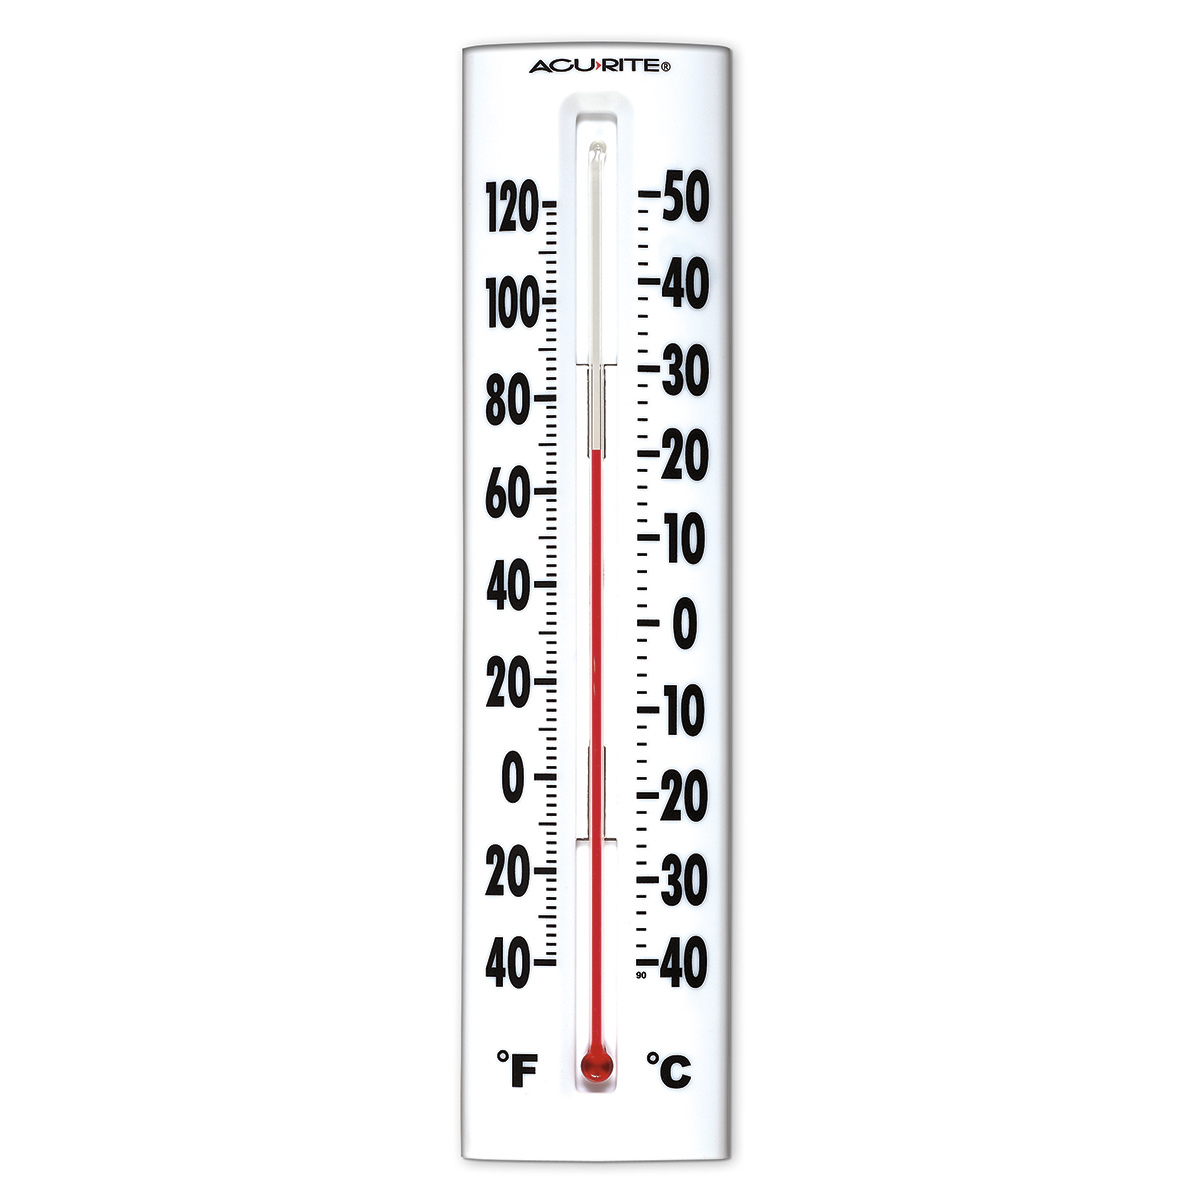 jednostki temperatury - Klasa 3 - Quiz